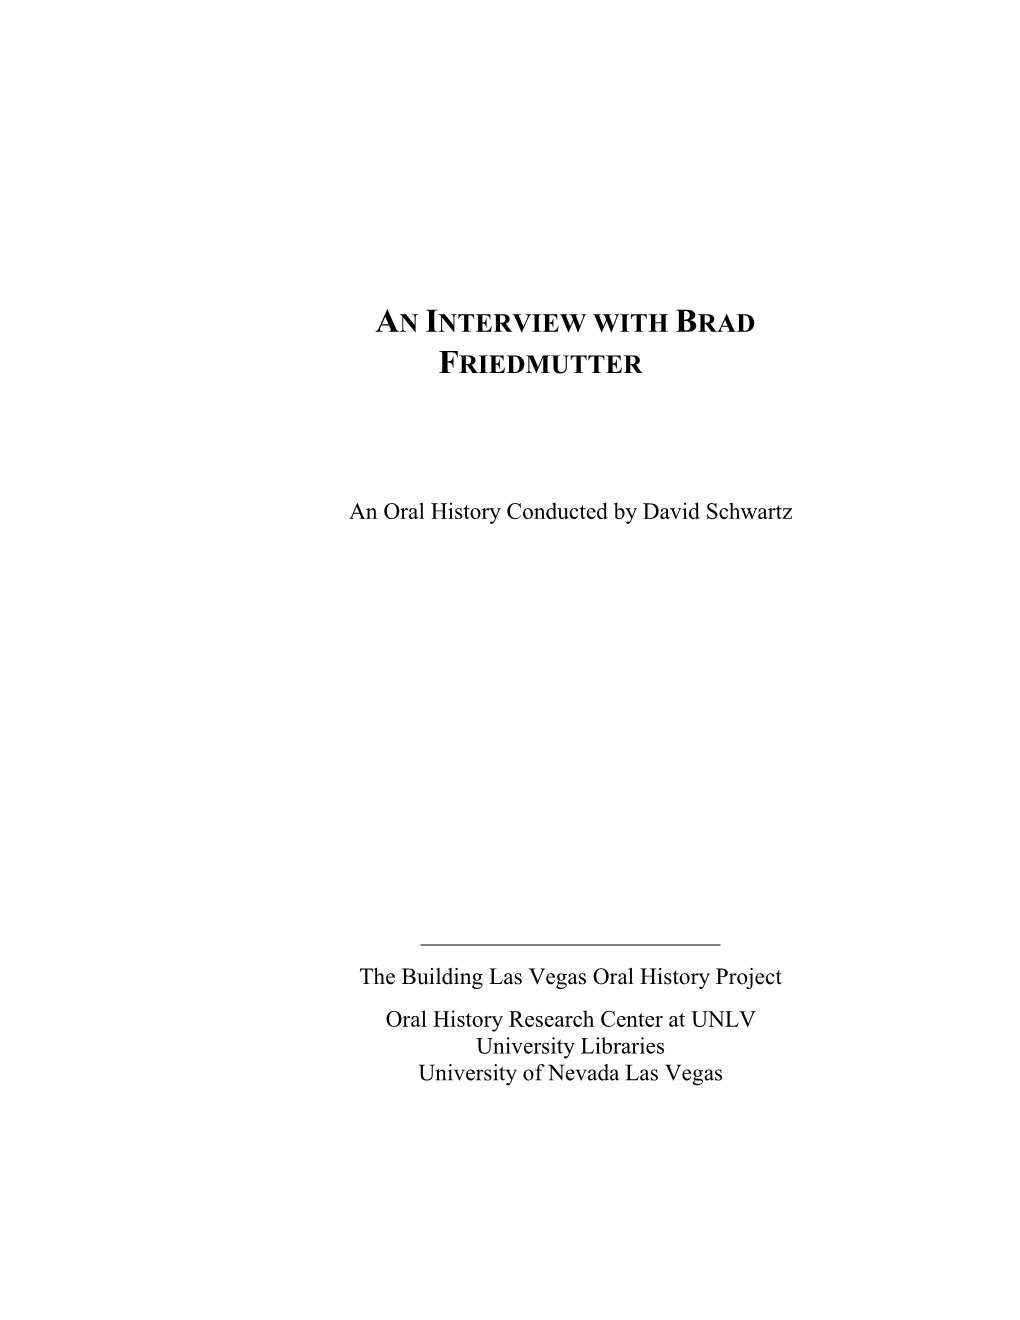 An Interview with Brad Friedmutter